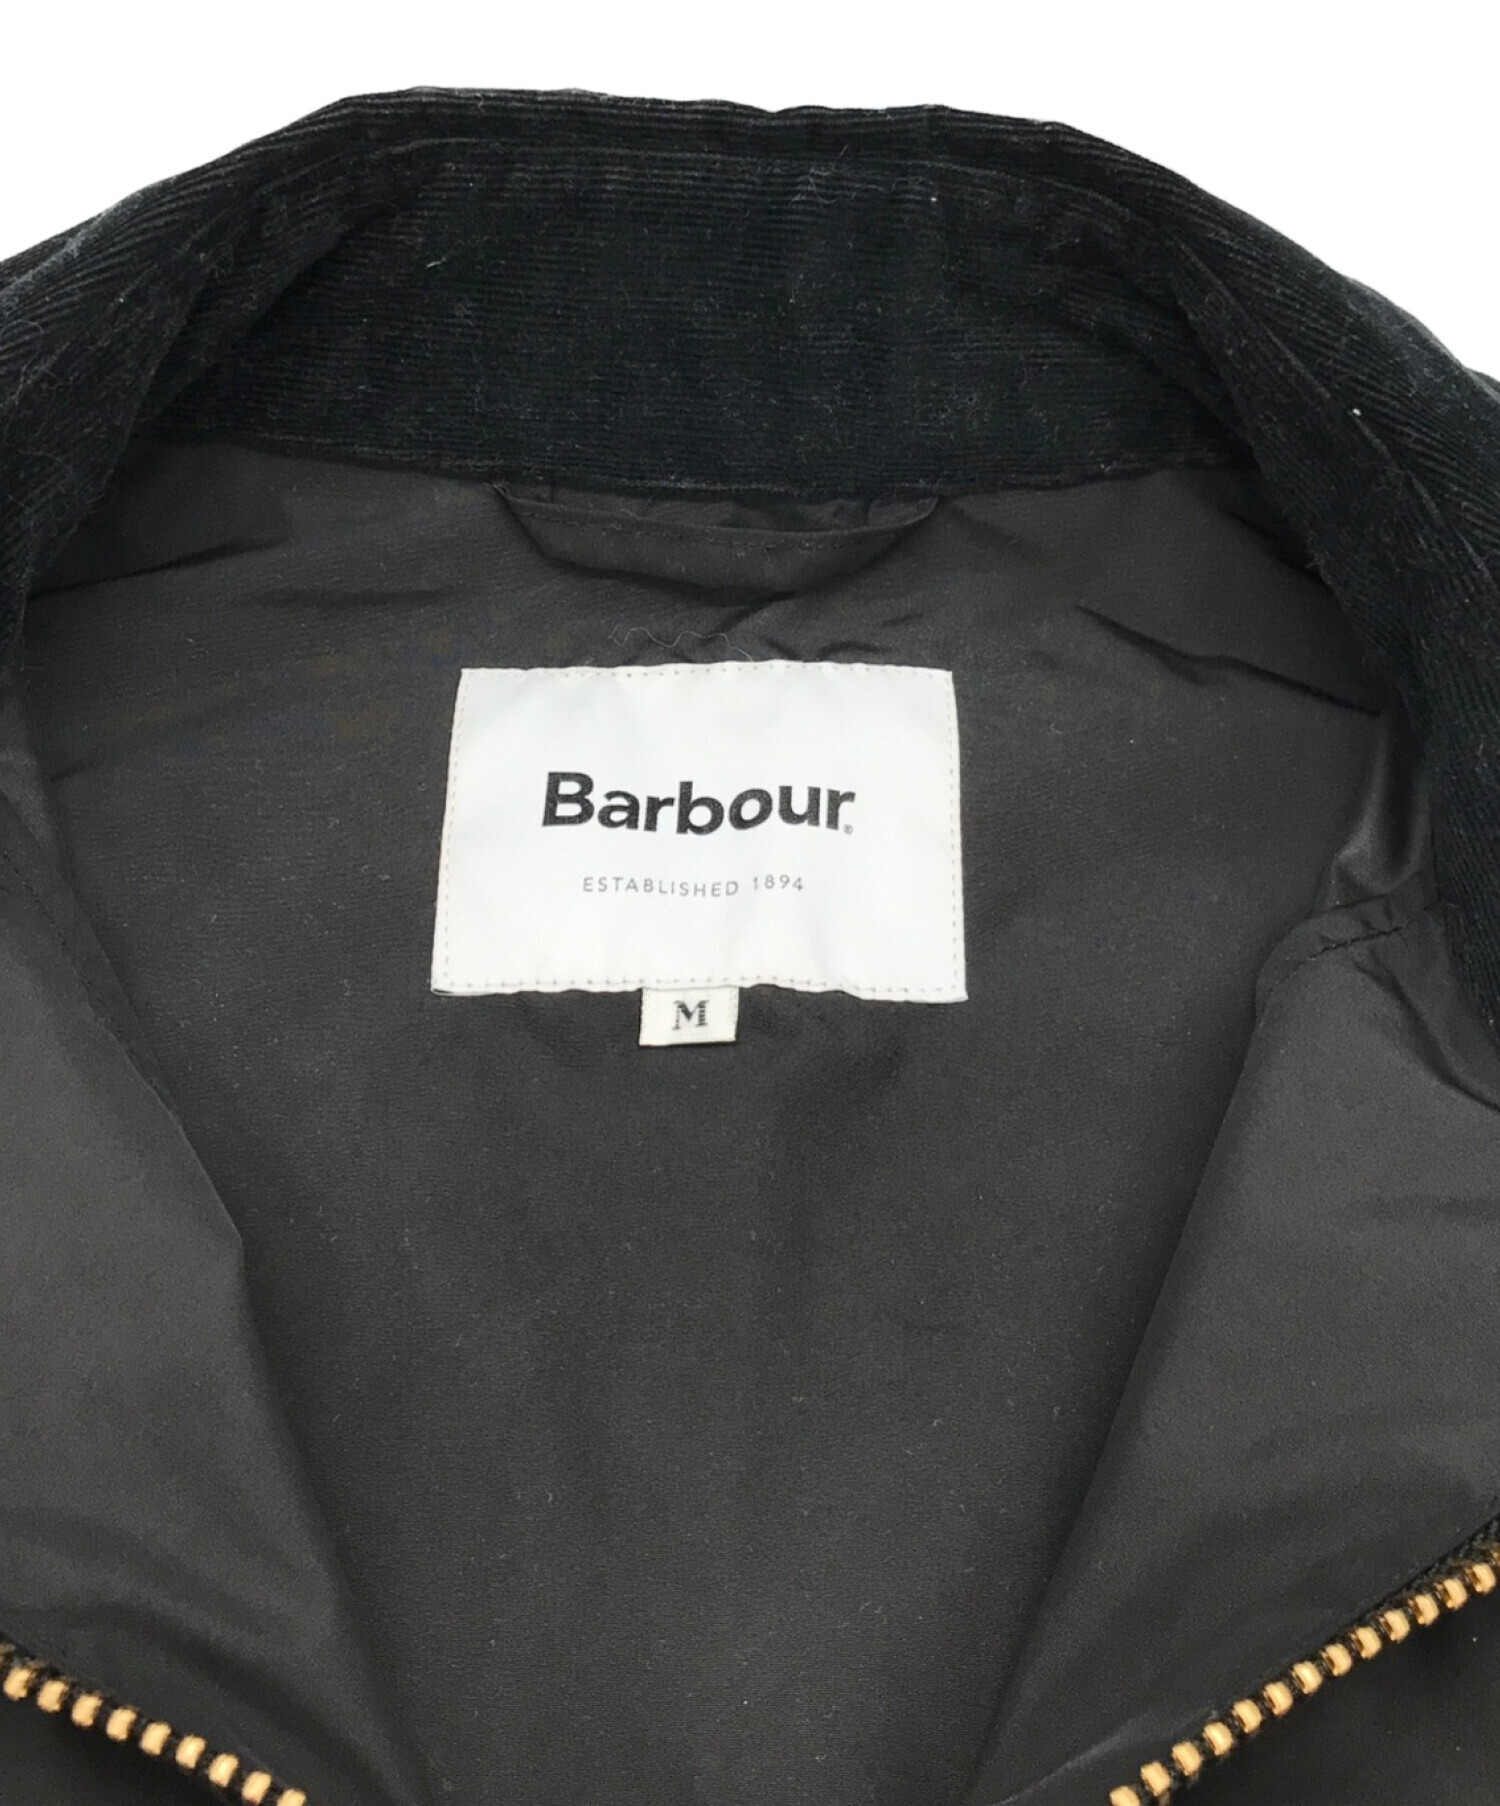 Barbour×Bshop (バブアー×ビショップ) 別注スペイジャケット ブラック サイズ:M